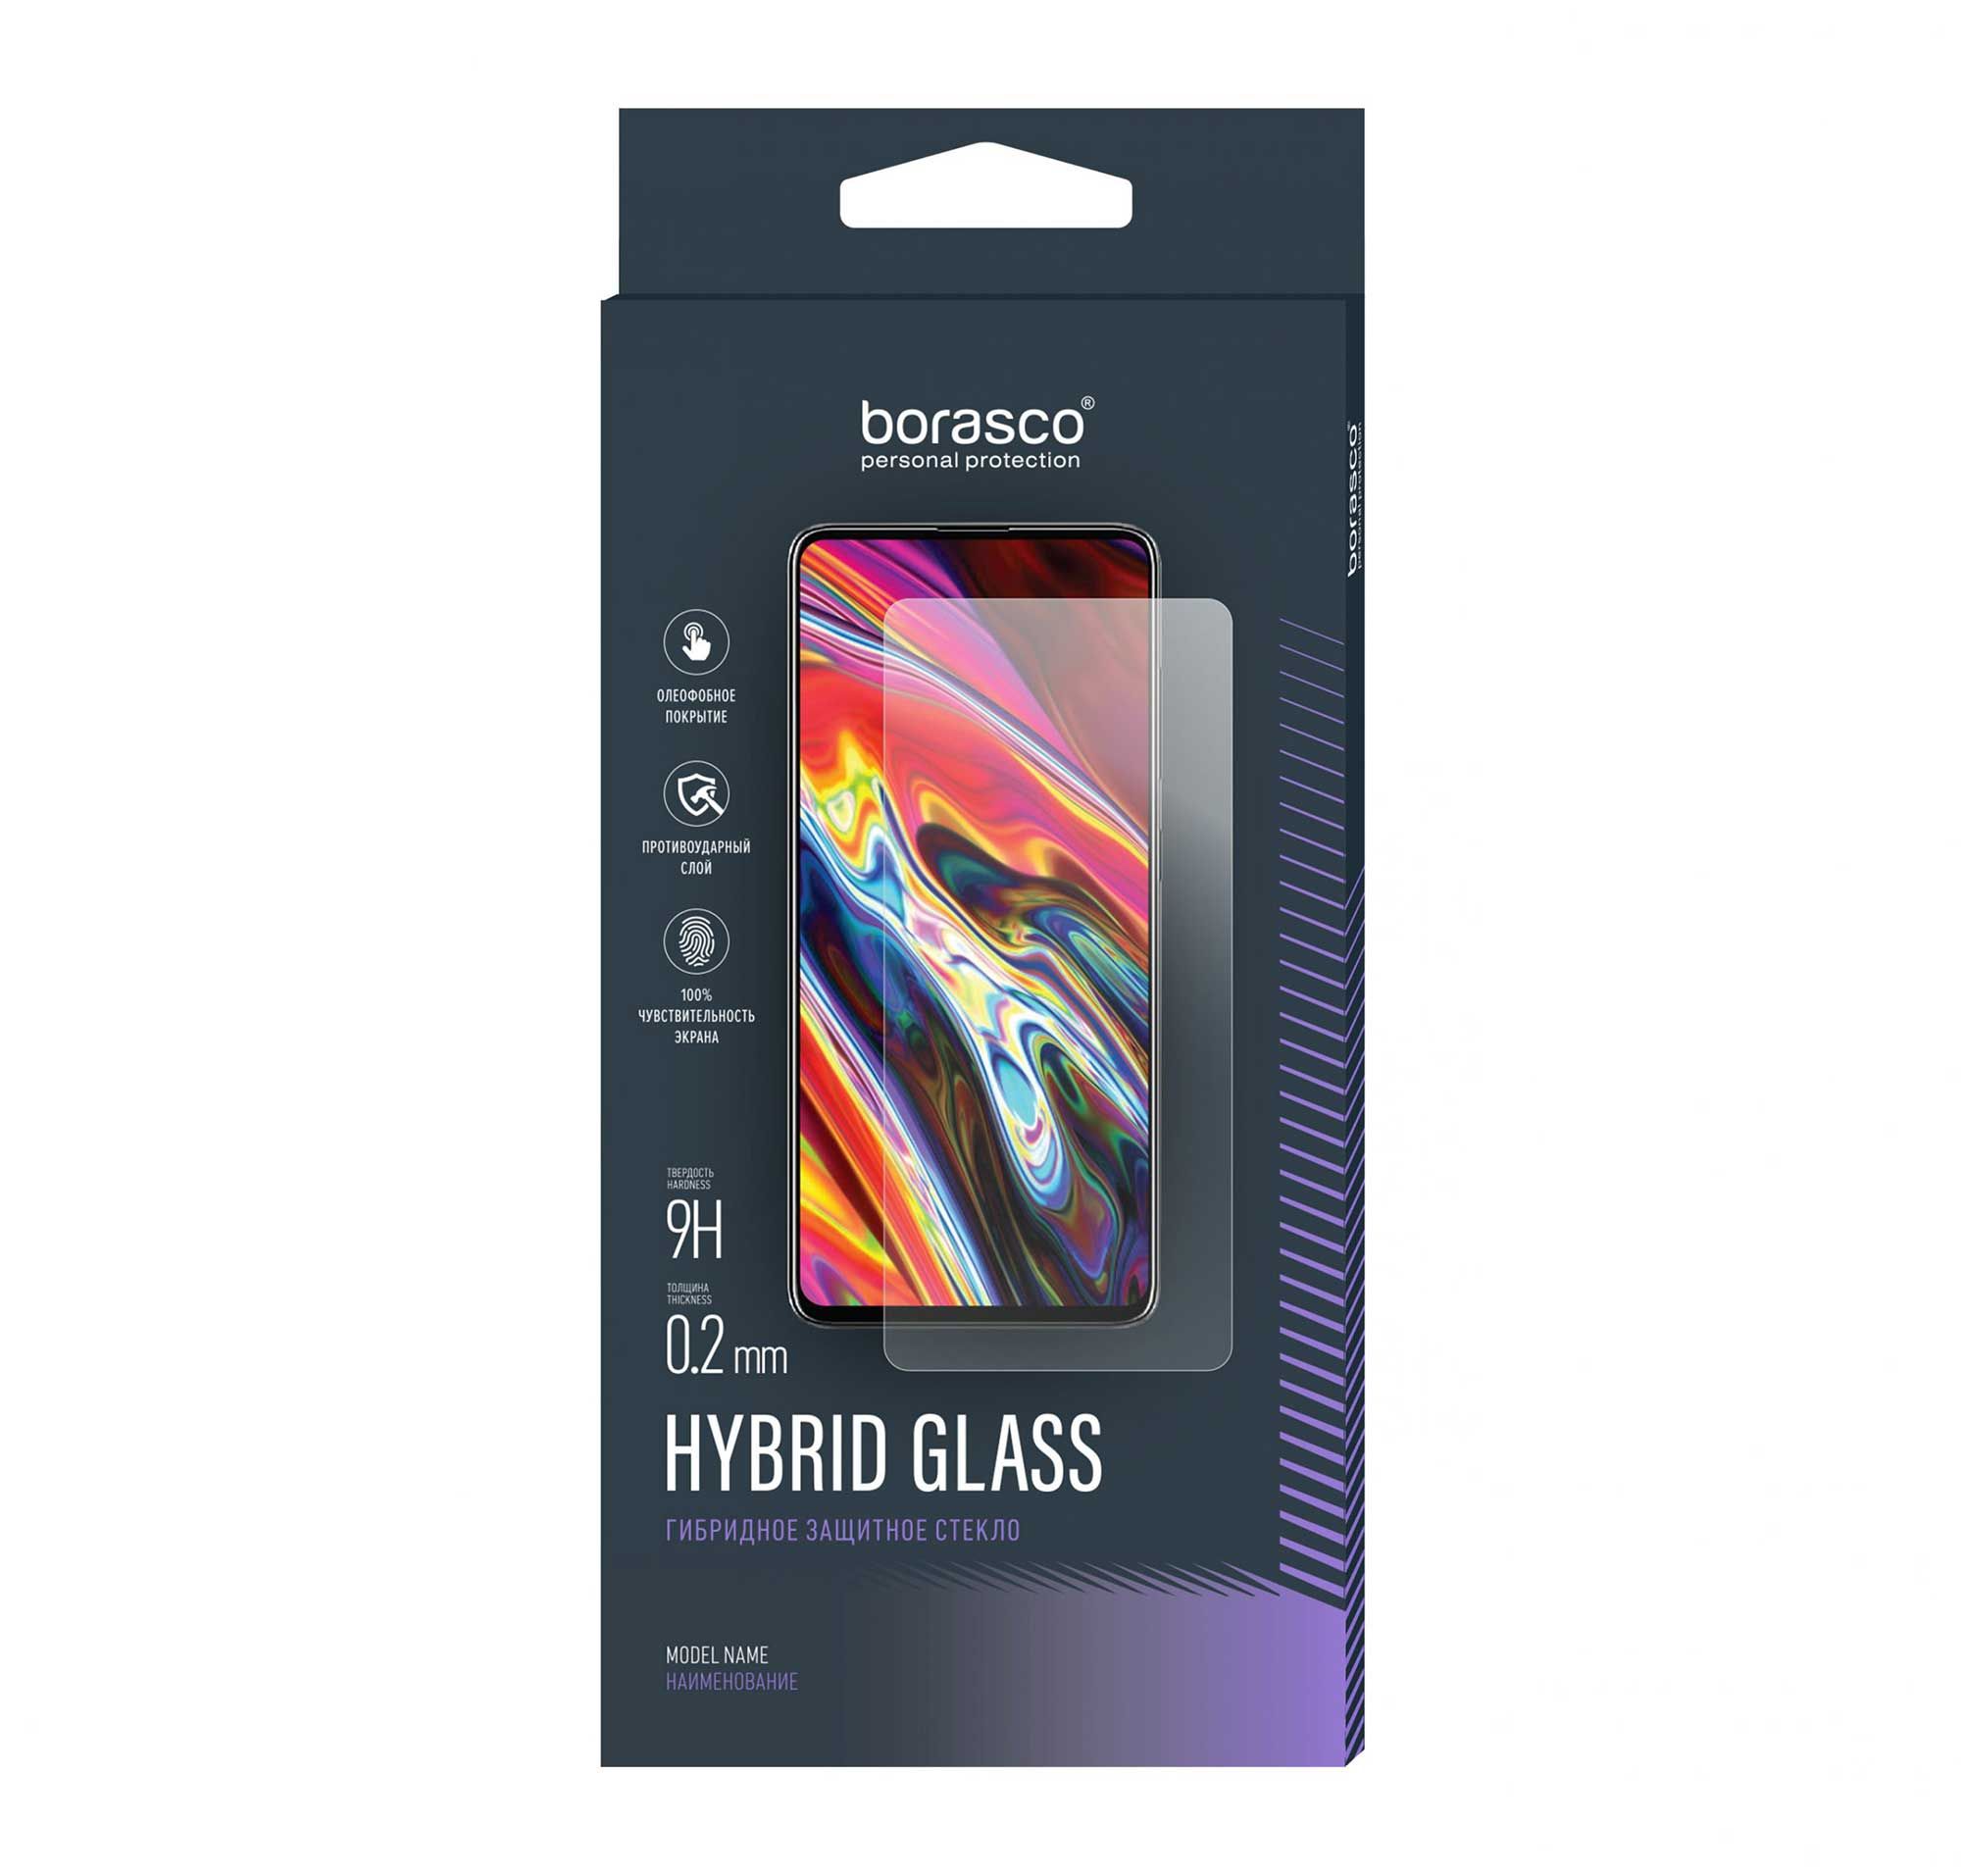 Защитное стекло Hybrid Glass для Asus Rog Phone 7 чехол mypads закручиваю розочки для asus rog phone 6 pro задняя панель накладка бампер